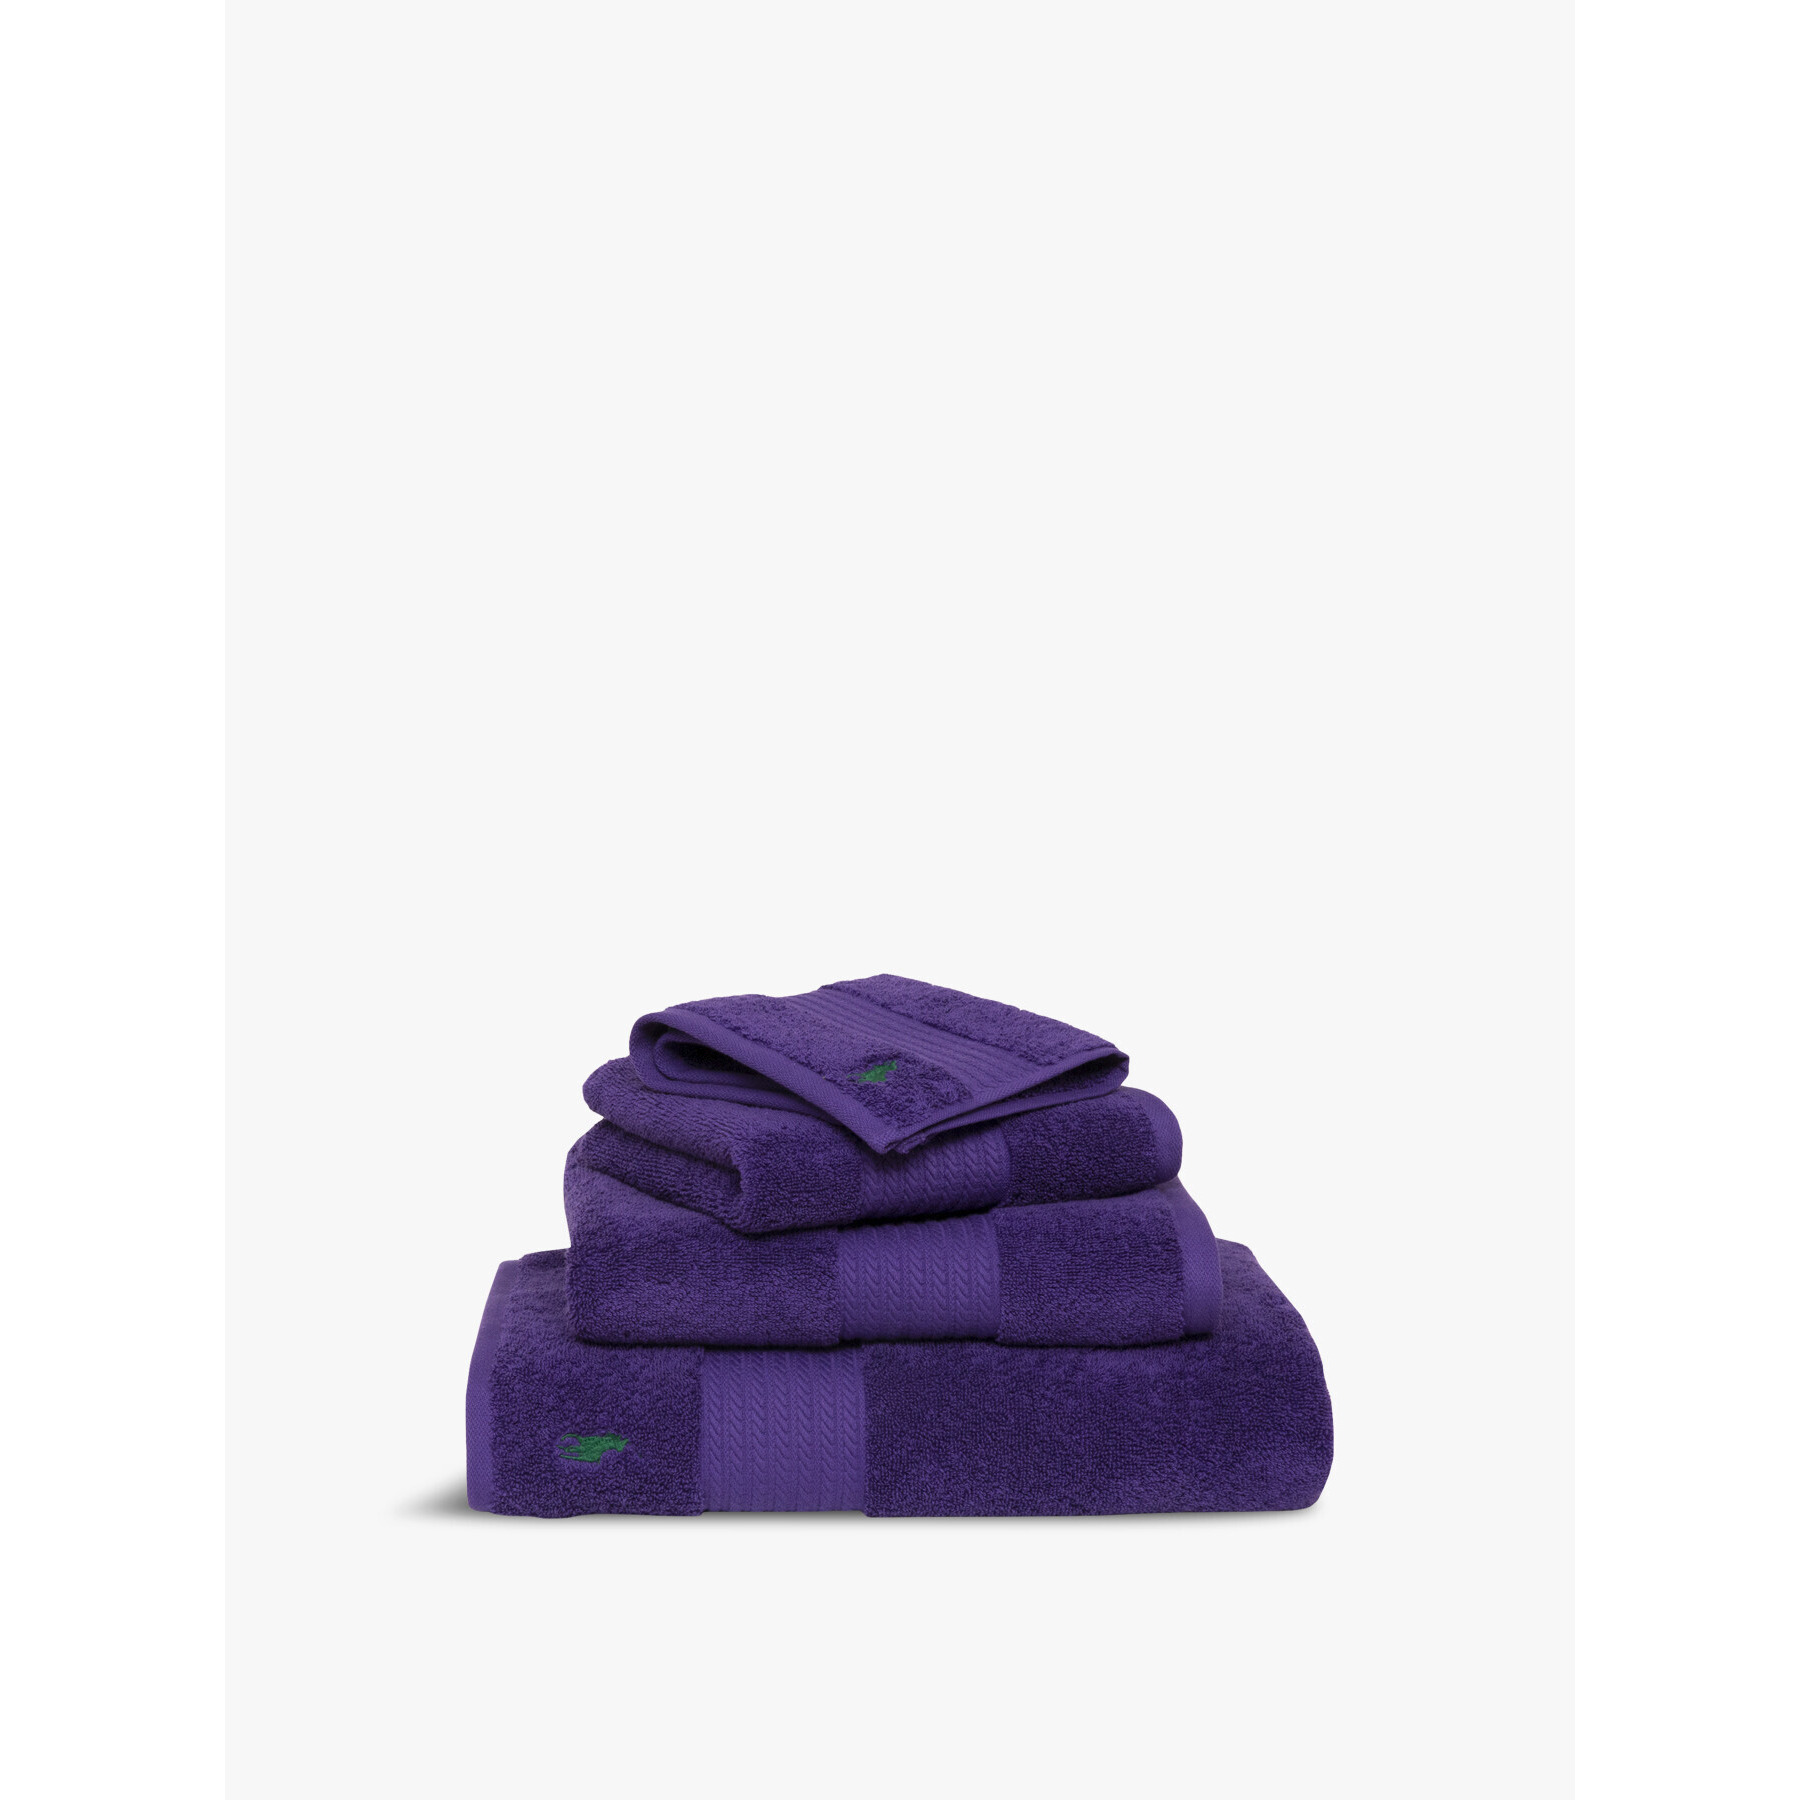 Ralph Lauren Home Player Bath Sheet Purple - image 1